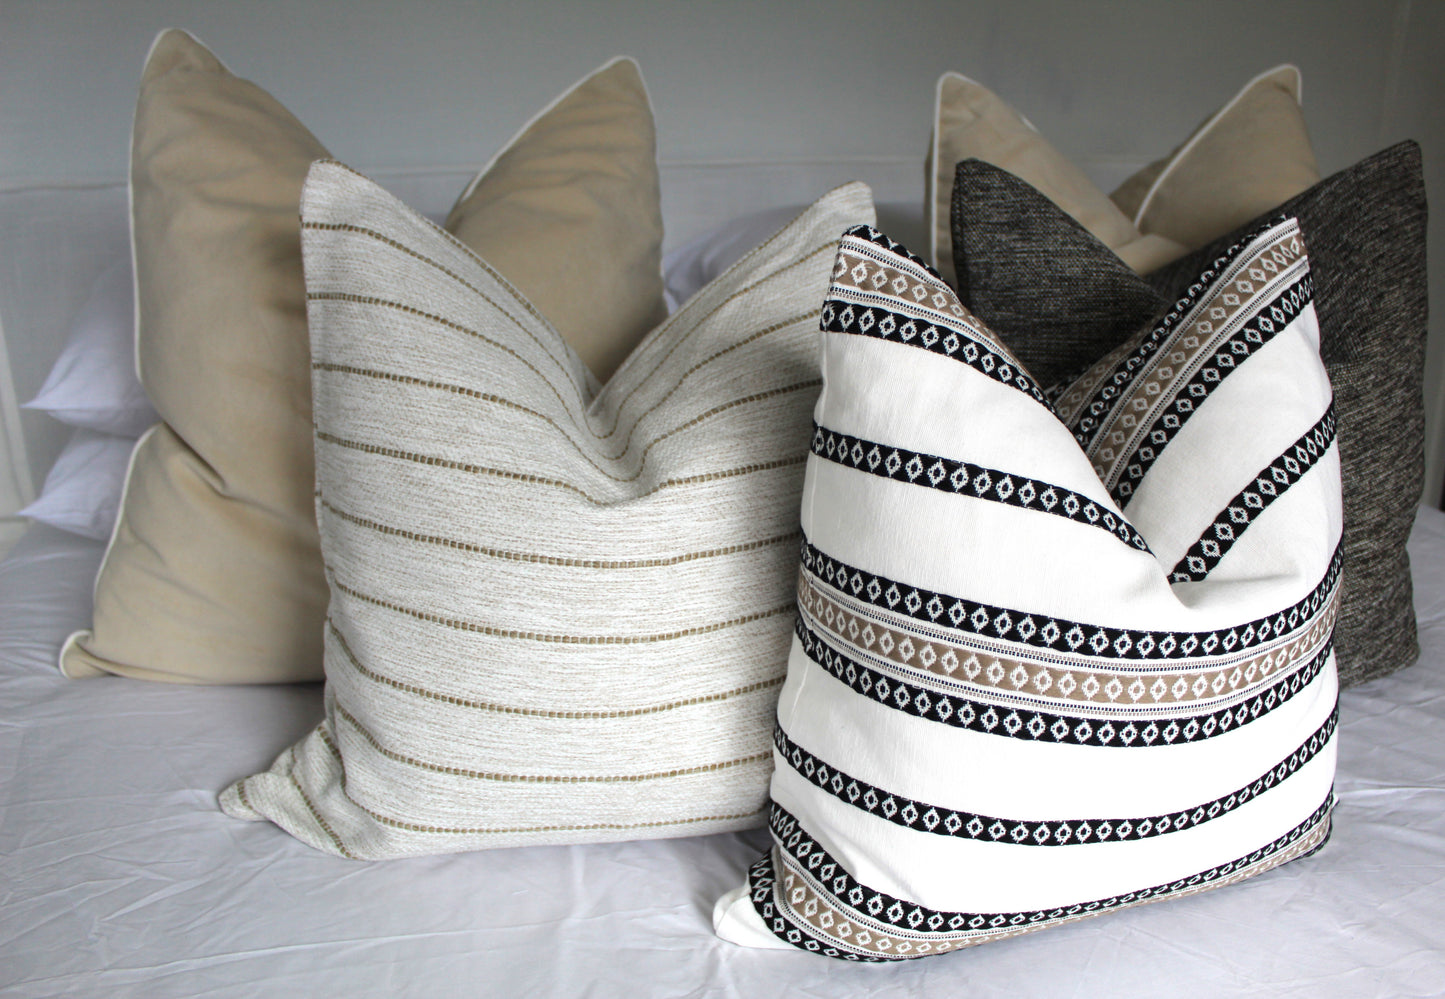 Boho style cushion covers